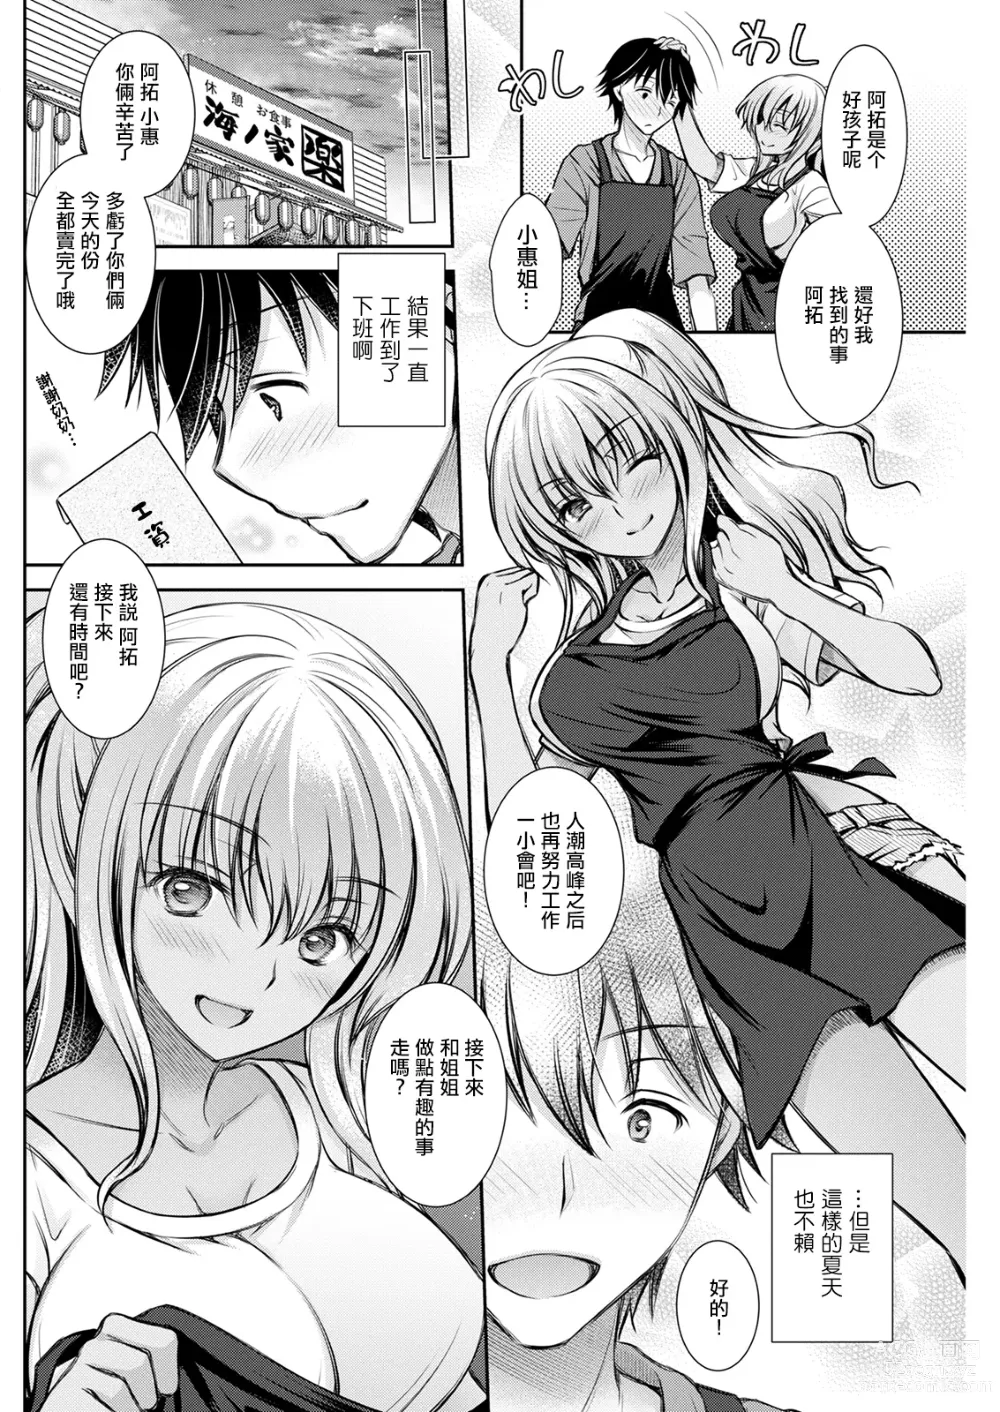 Page 4 of manga Umi no Yeah!!